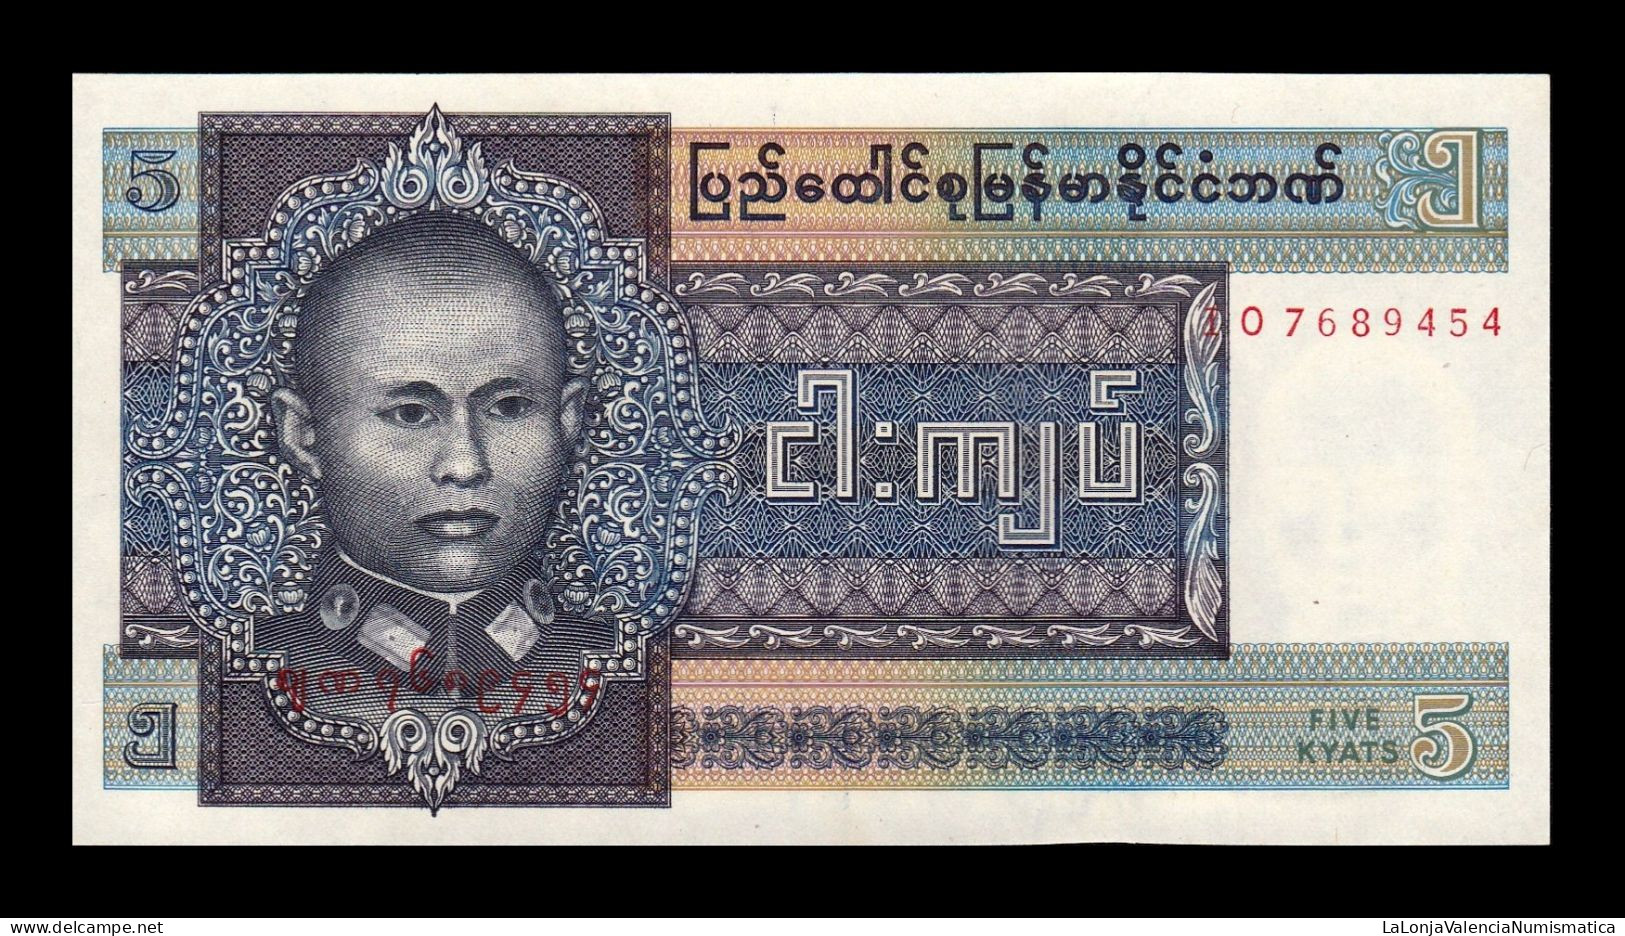 Burma Birmania 5 Kyats 1973 Pick 57 Sc Unc - Myanmar